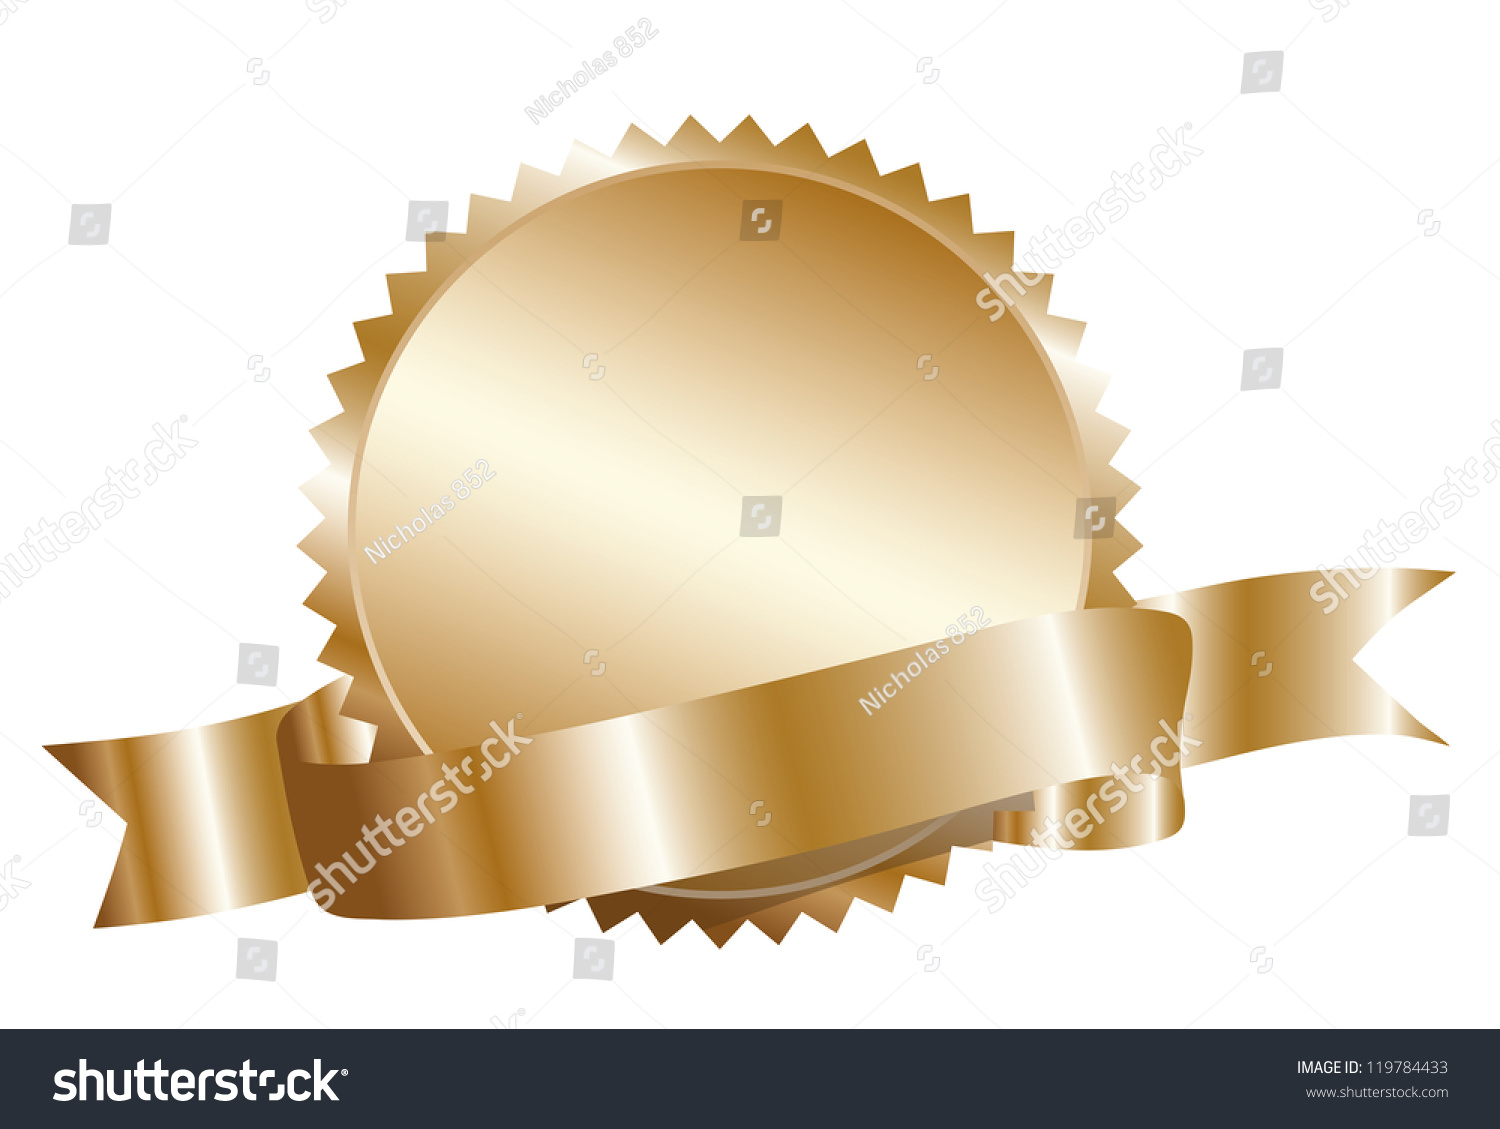 Blank Gold Label. Vector - 119784433 : Shutterstock